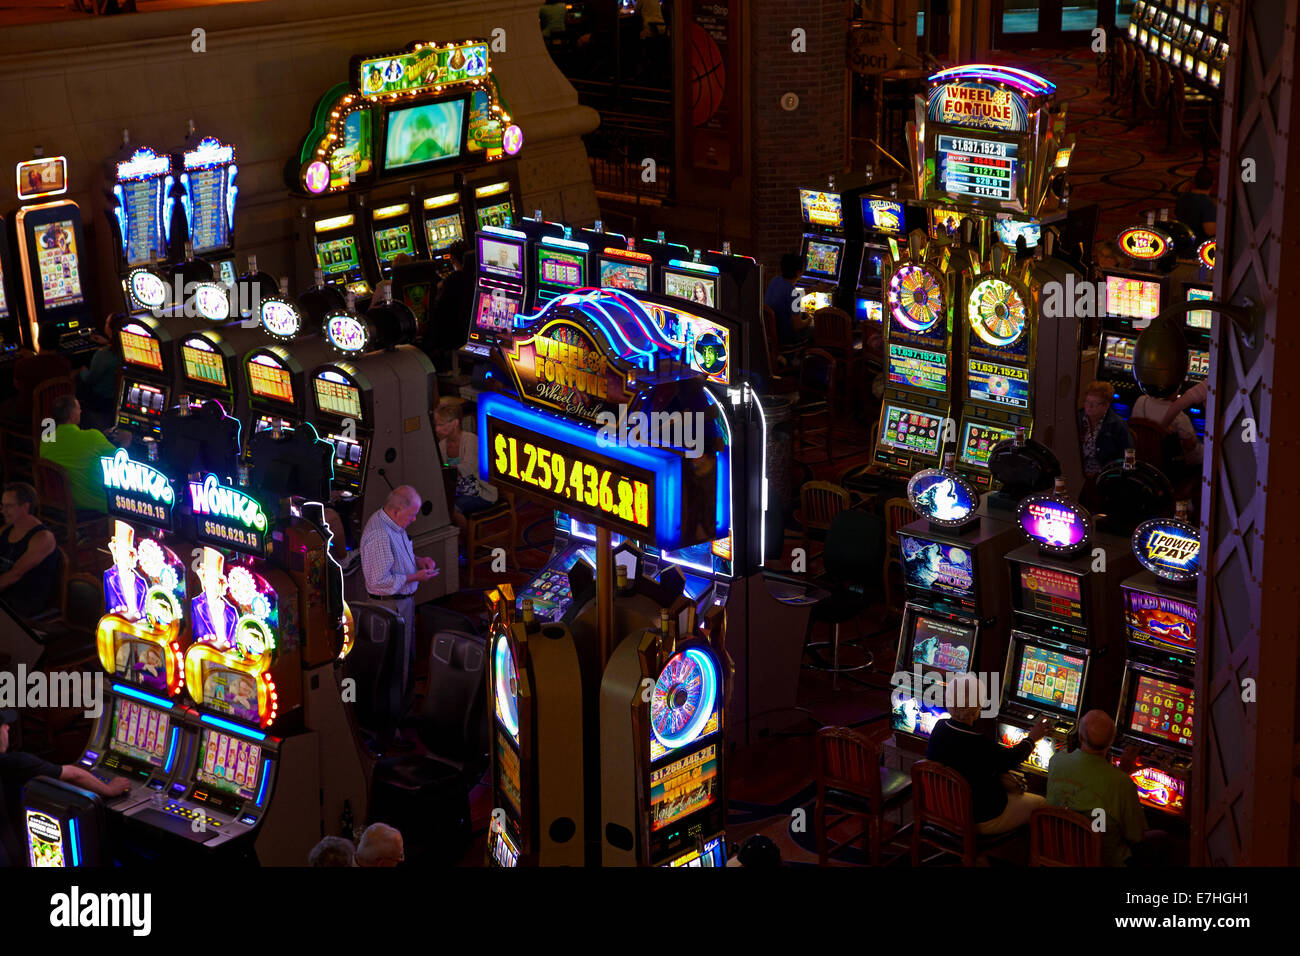 CASINOS Las Vegas inside. English - Español. Ruletas. Slots. Casinos de Las  Vegas por dentro. 